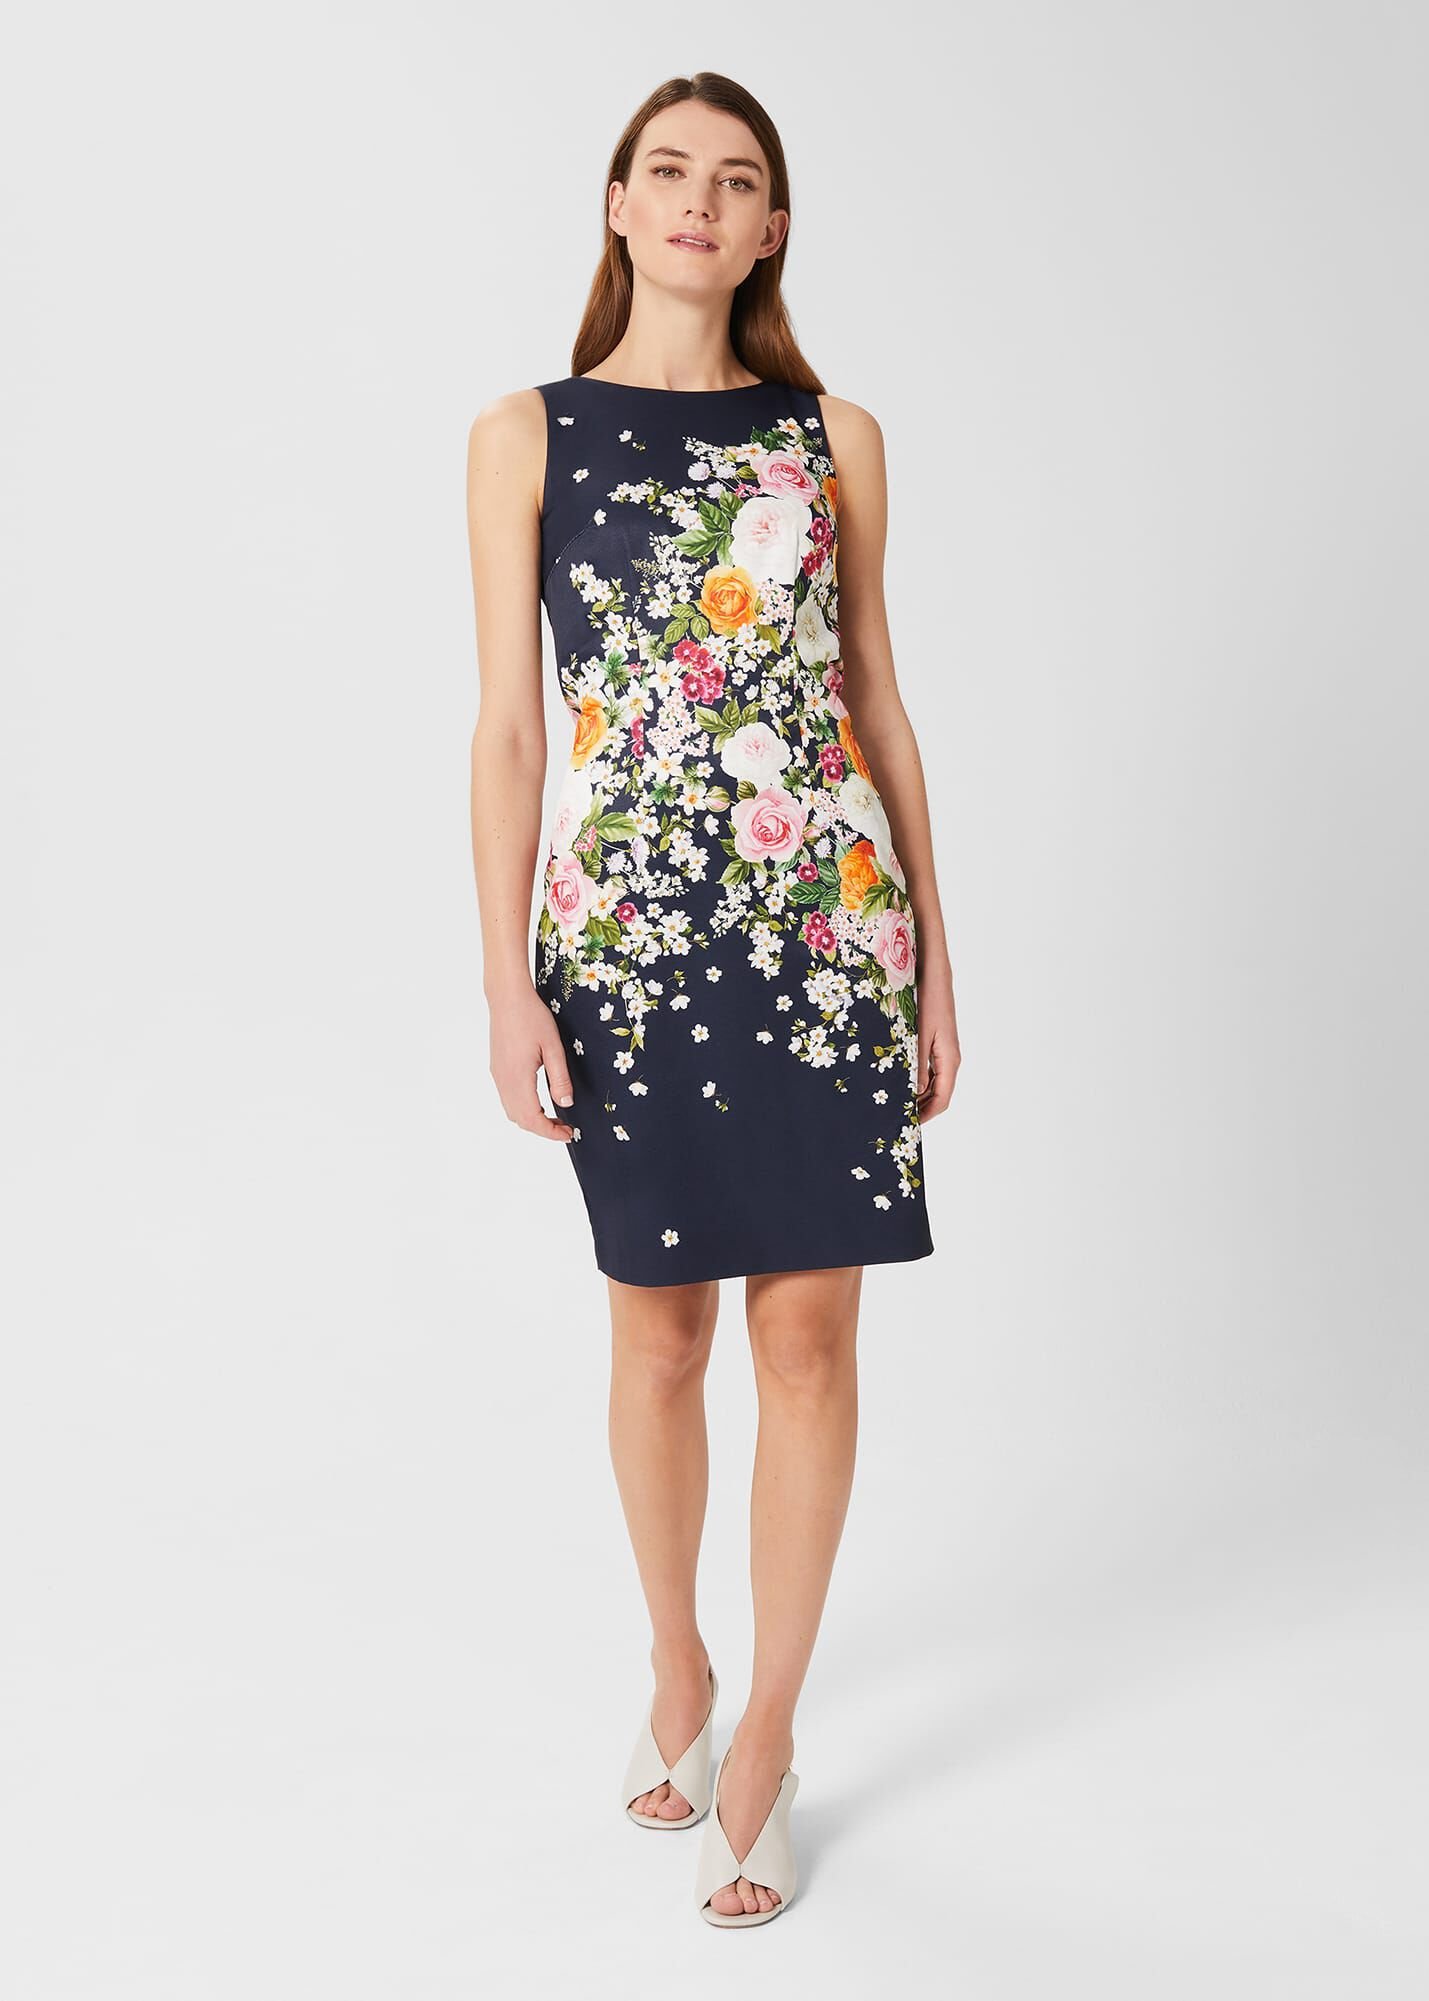 Floral Dresses | Floral Print Occasion, Work & Day Dresses | Hobbs 